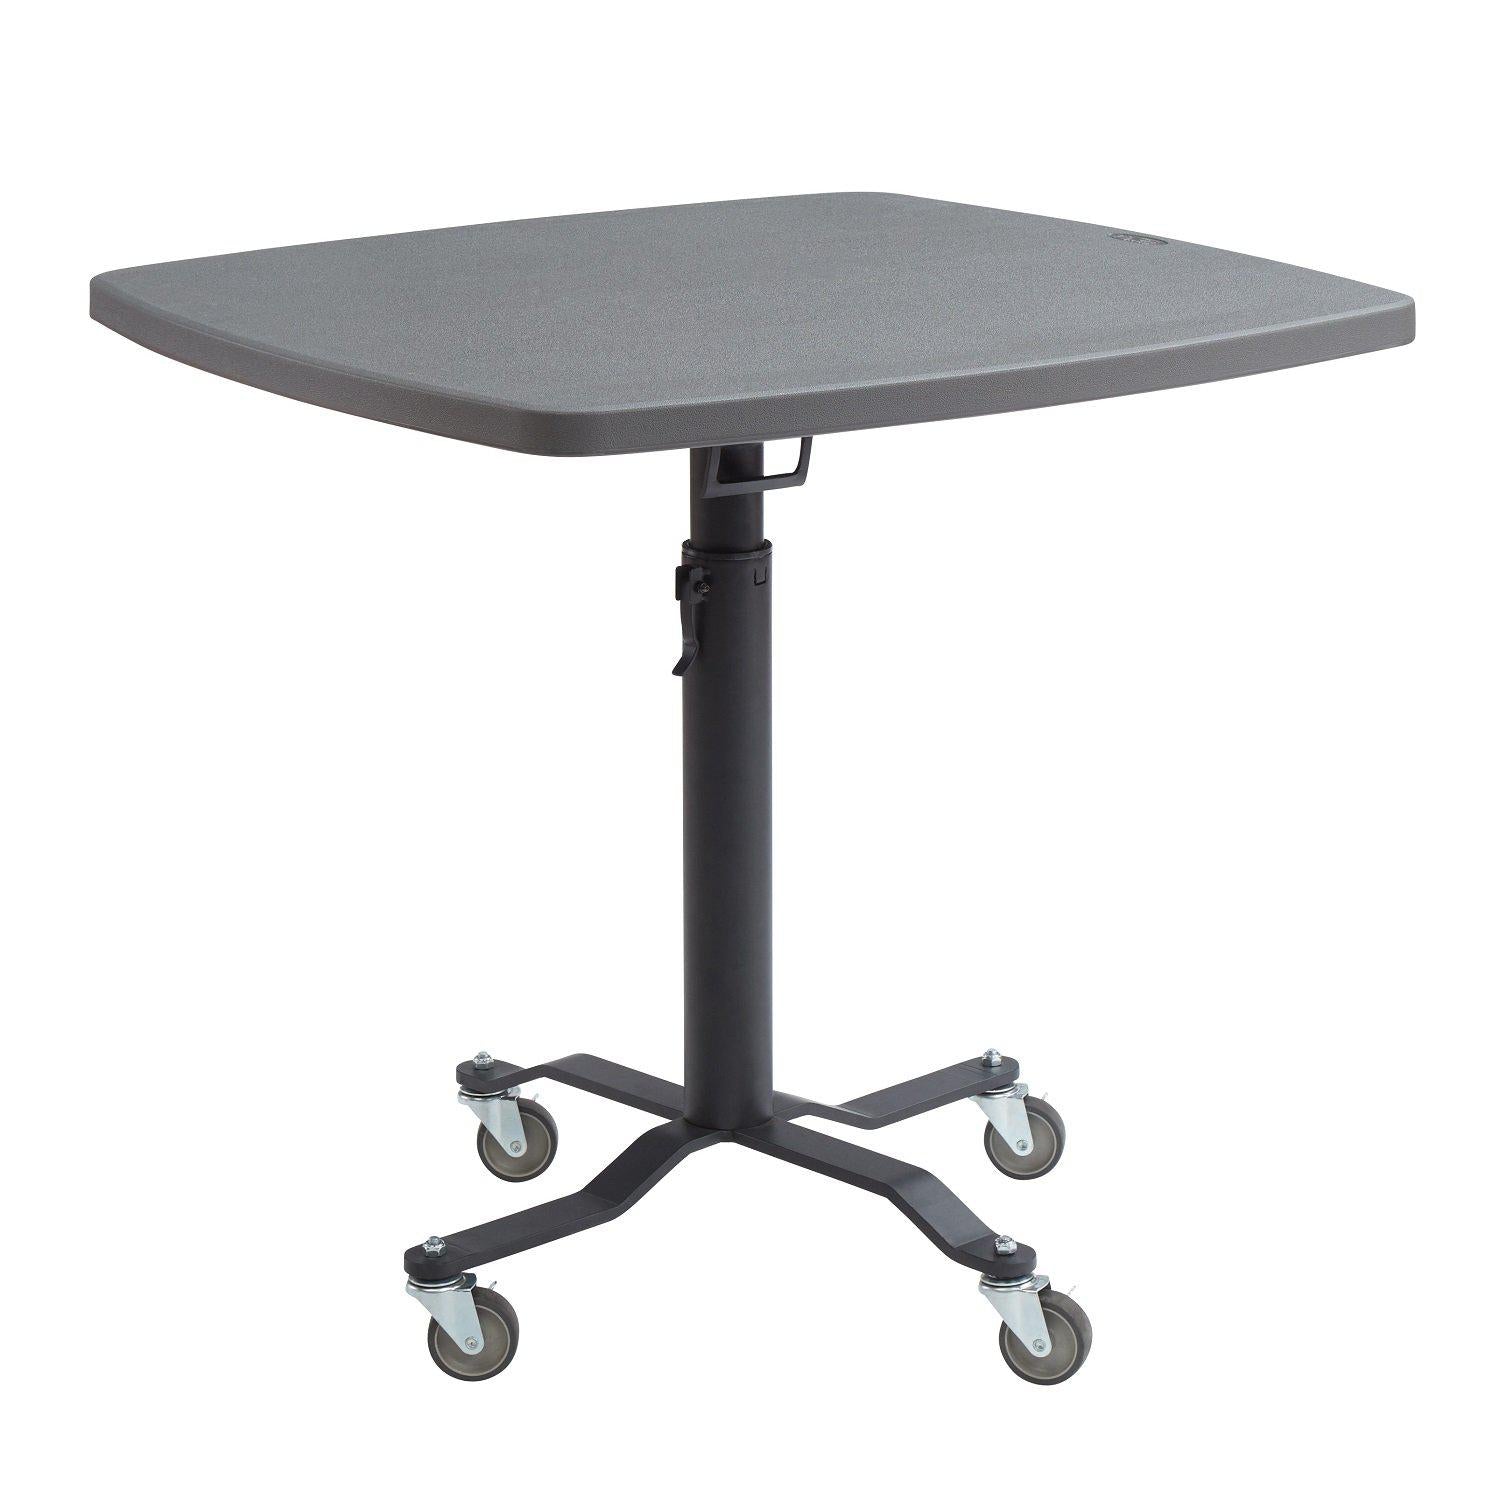 Premium Plus Adjustable Height Café Table, 36" Square, Charcoal Slate Blow Molded Plastic Top